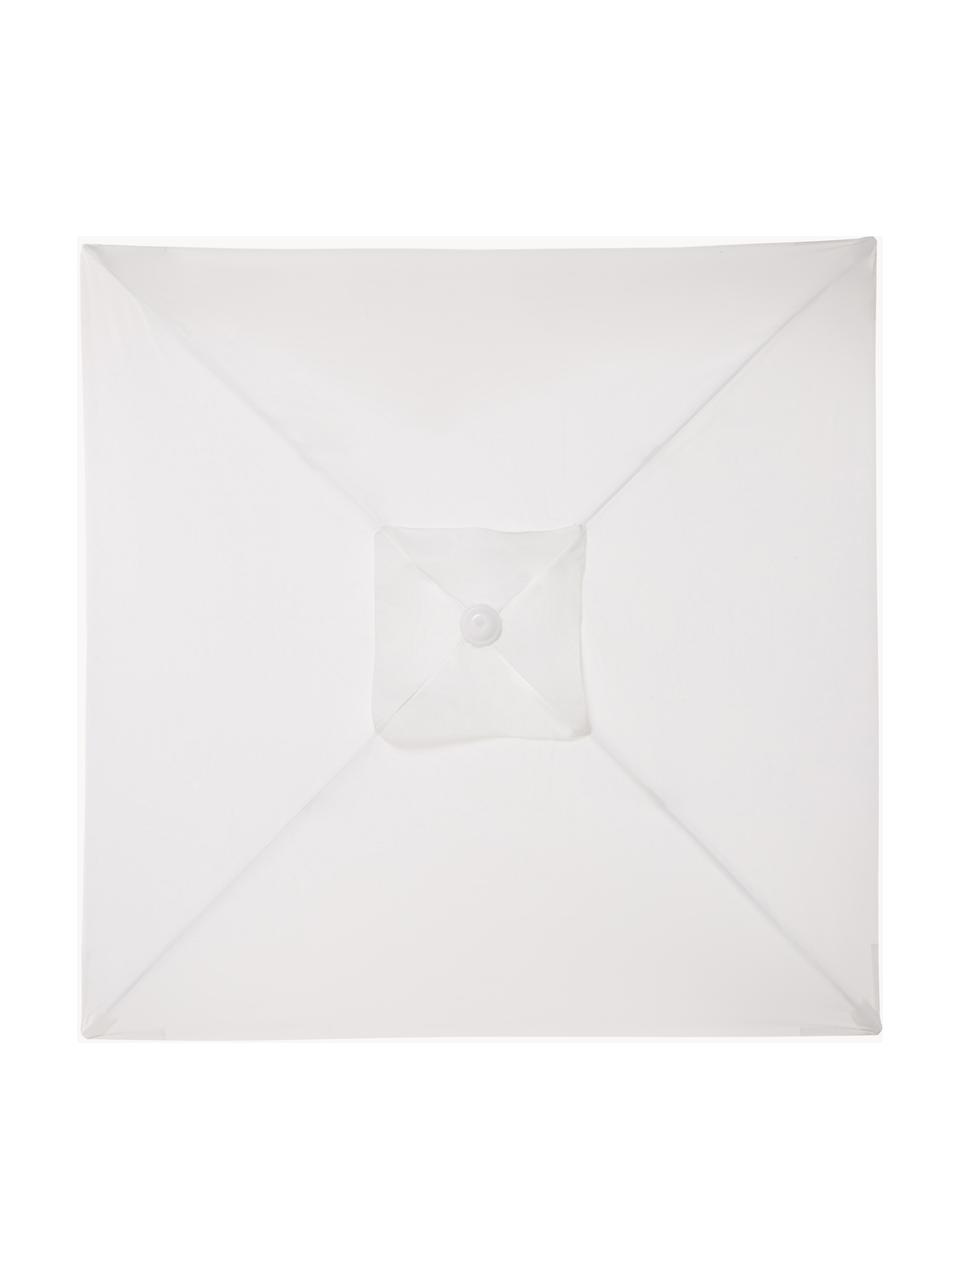 Altán Premium, Bílá, světle béžová, Š 198 cm, V 198 cm